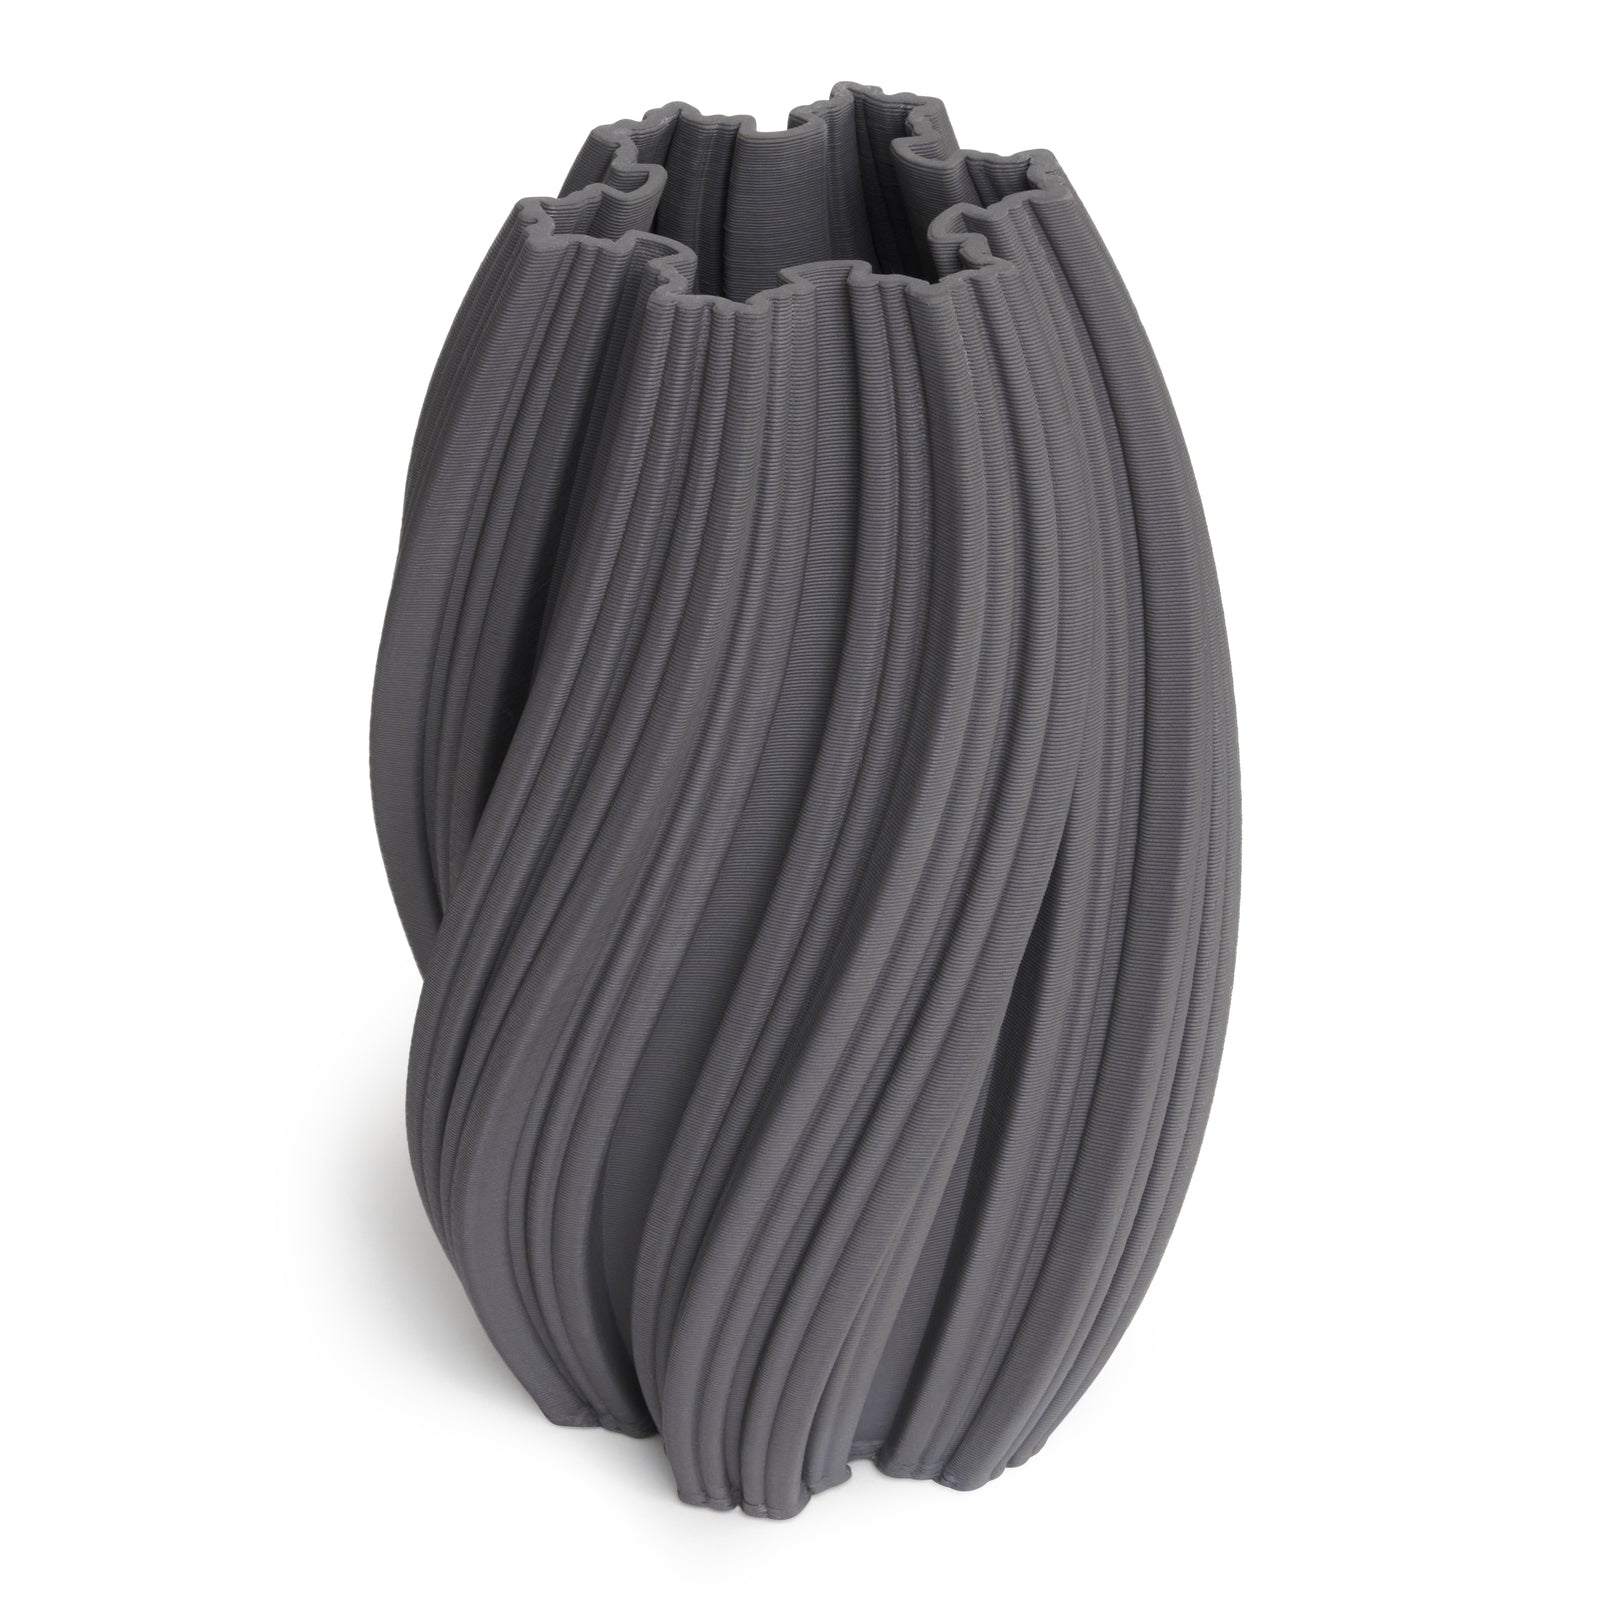 EMMA Charcoal Vase 31cm